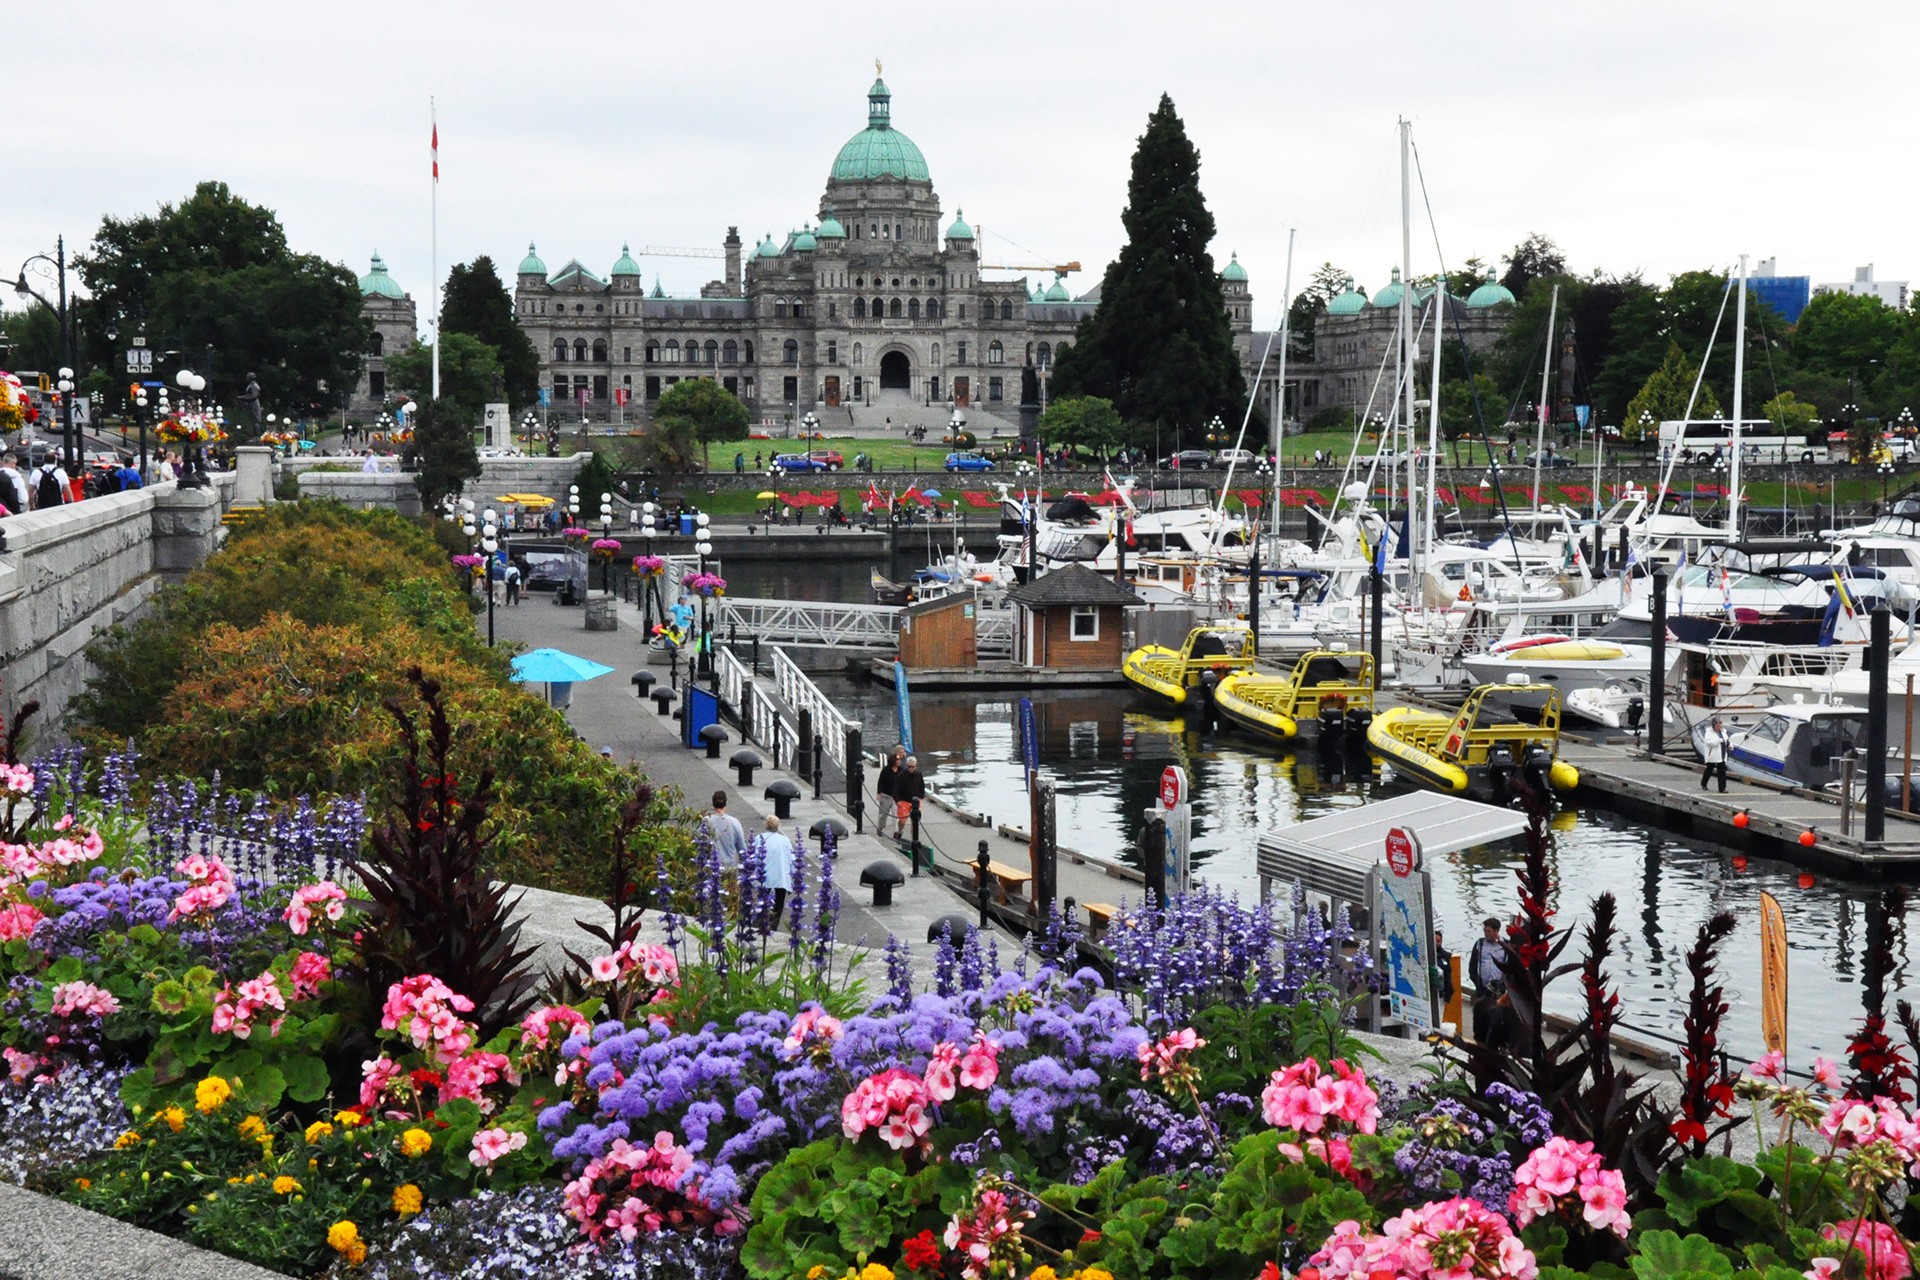 Victoria - The Jewel of Vancouver Island